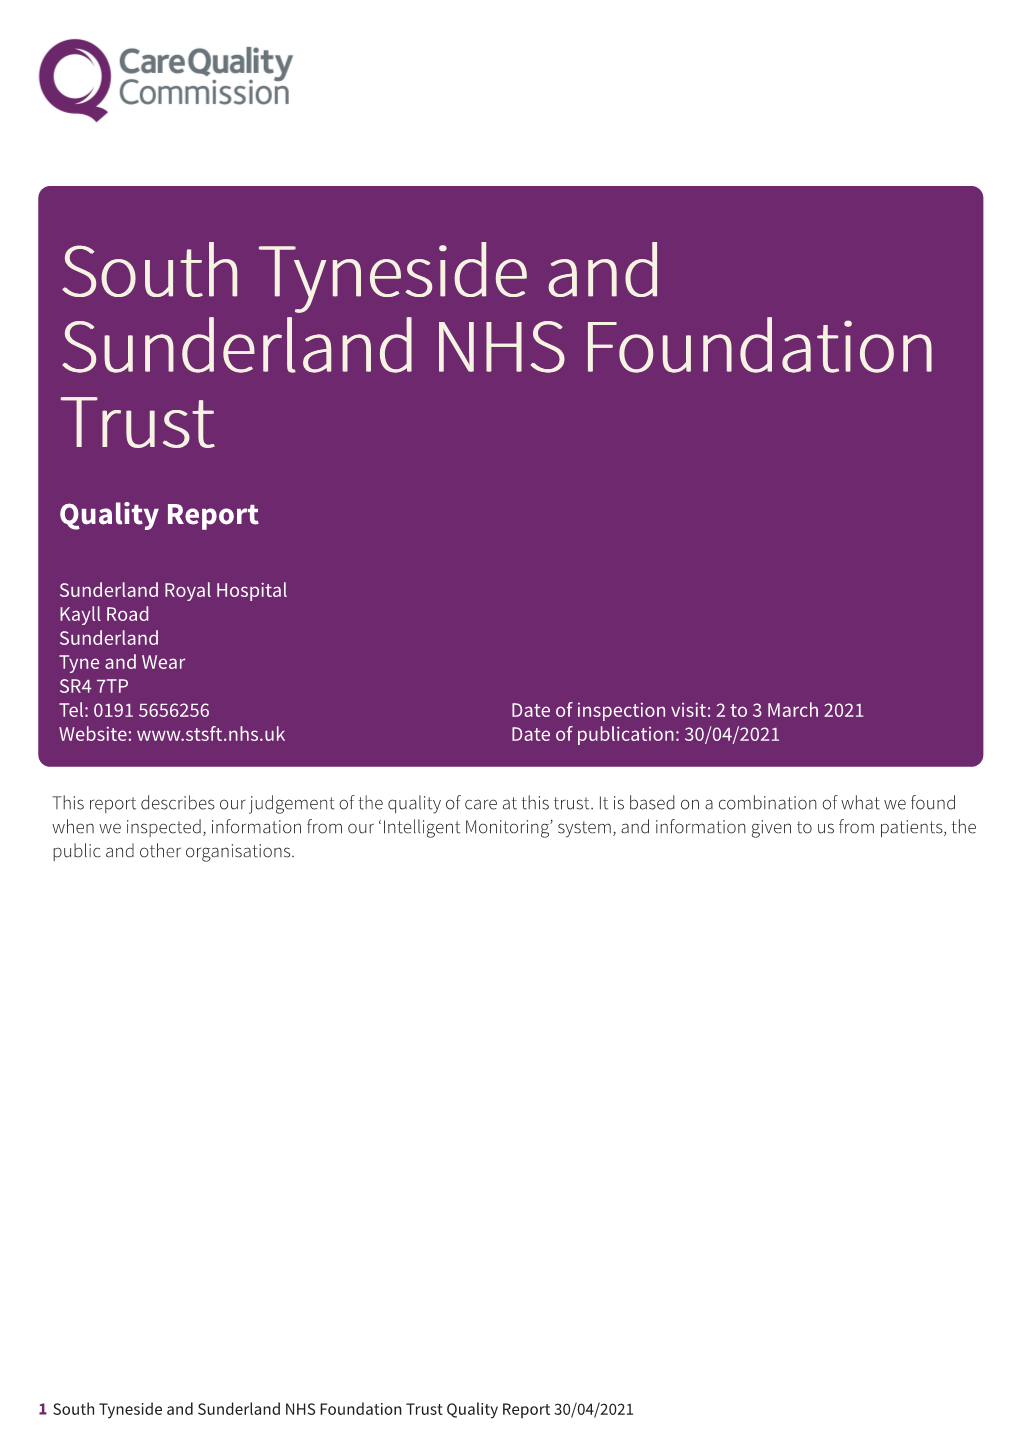 South Tyneside and Sunderland NHS Foundation Trust